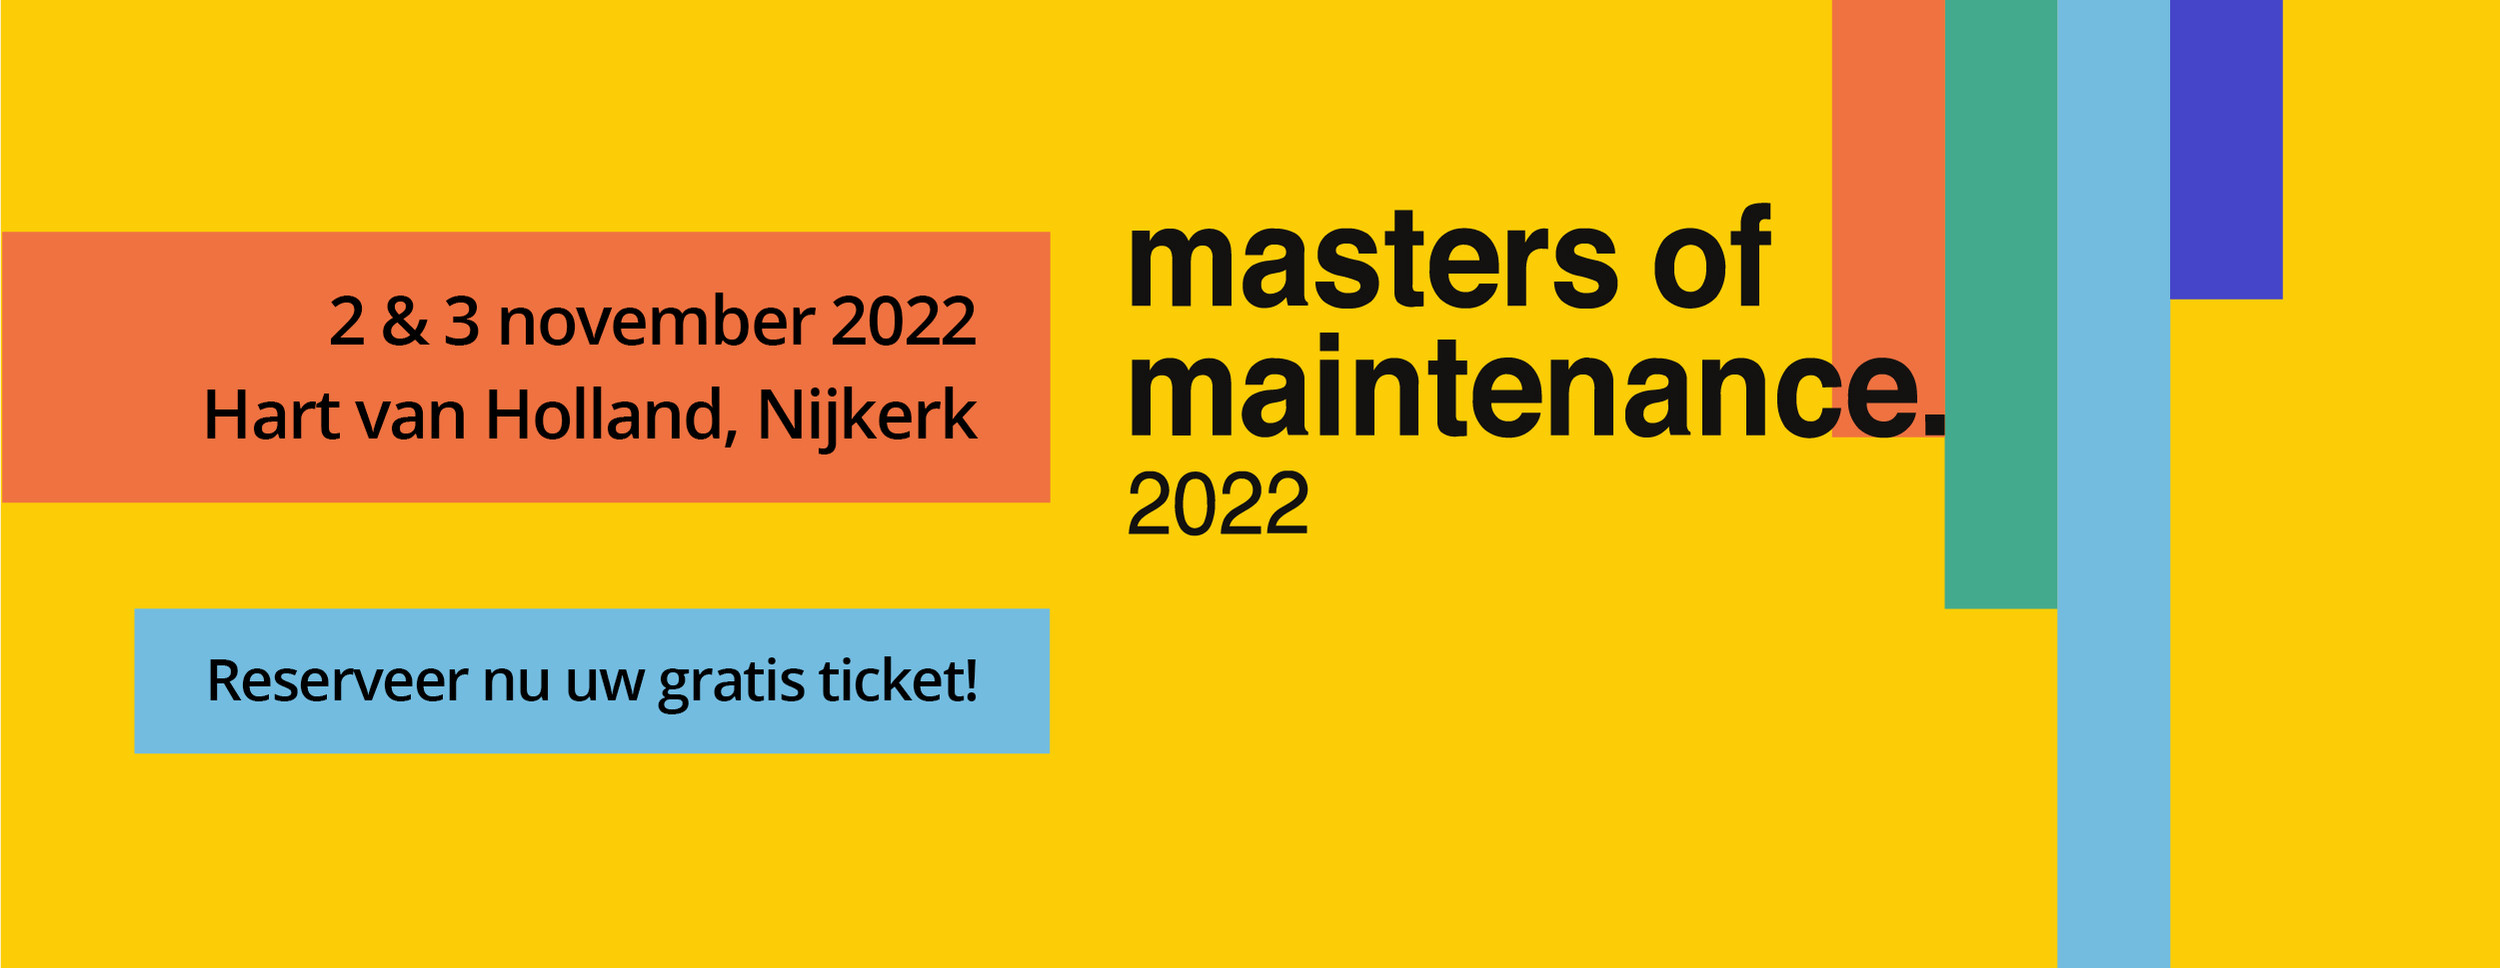 Masters of maintenance 2022